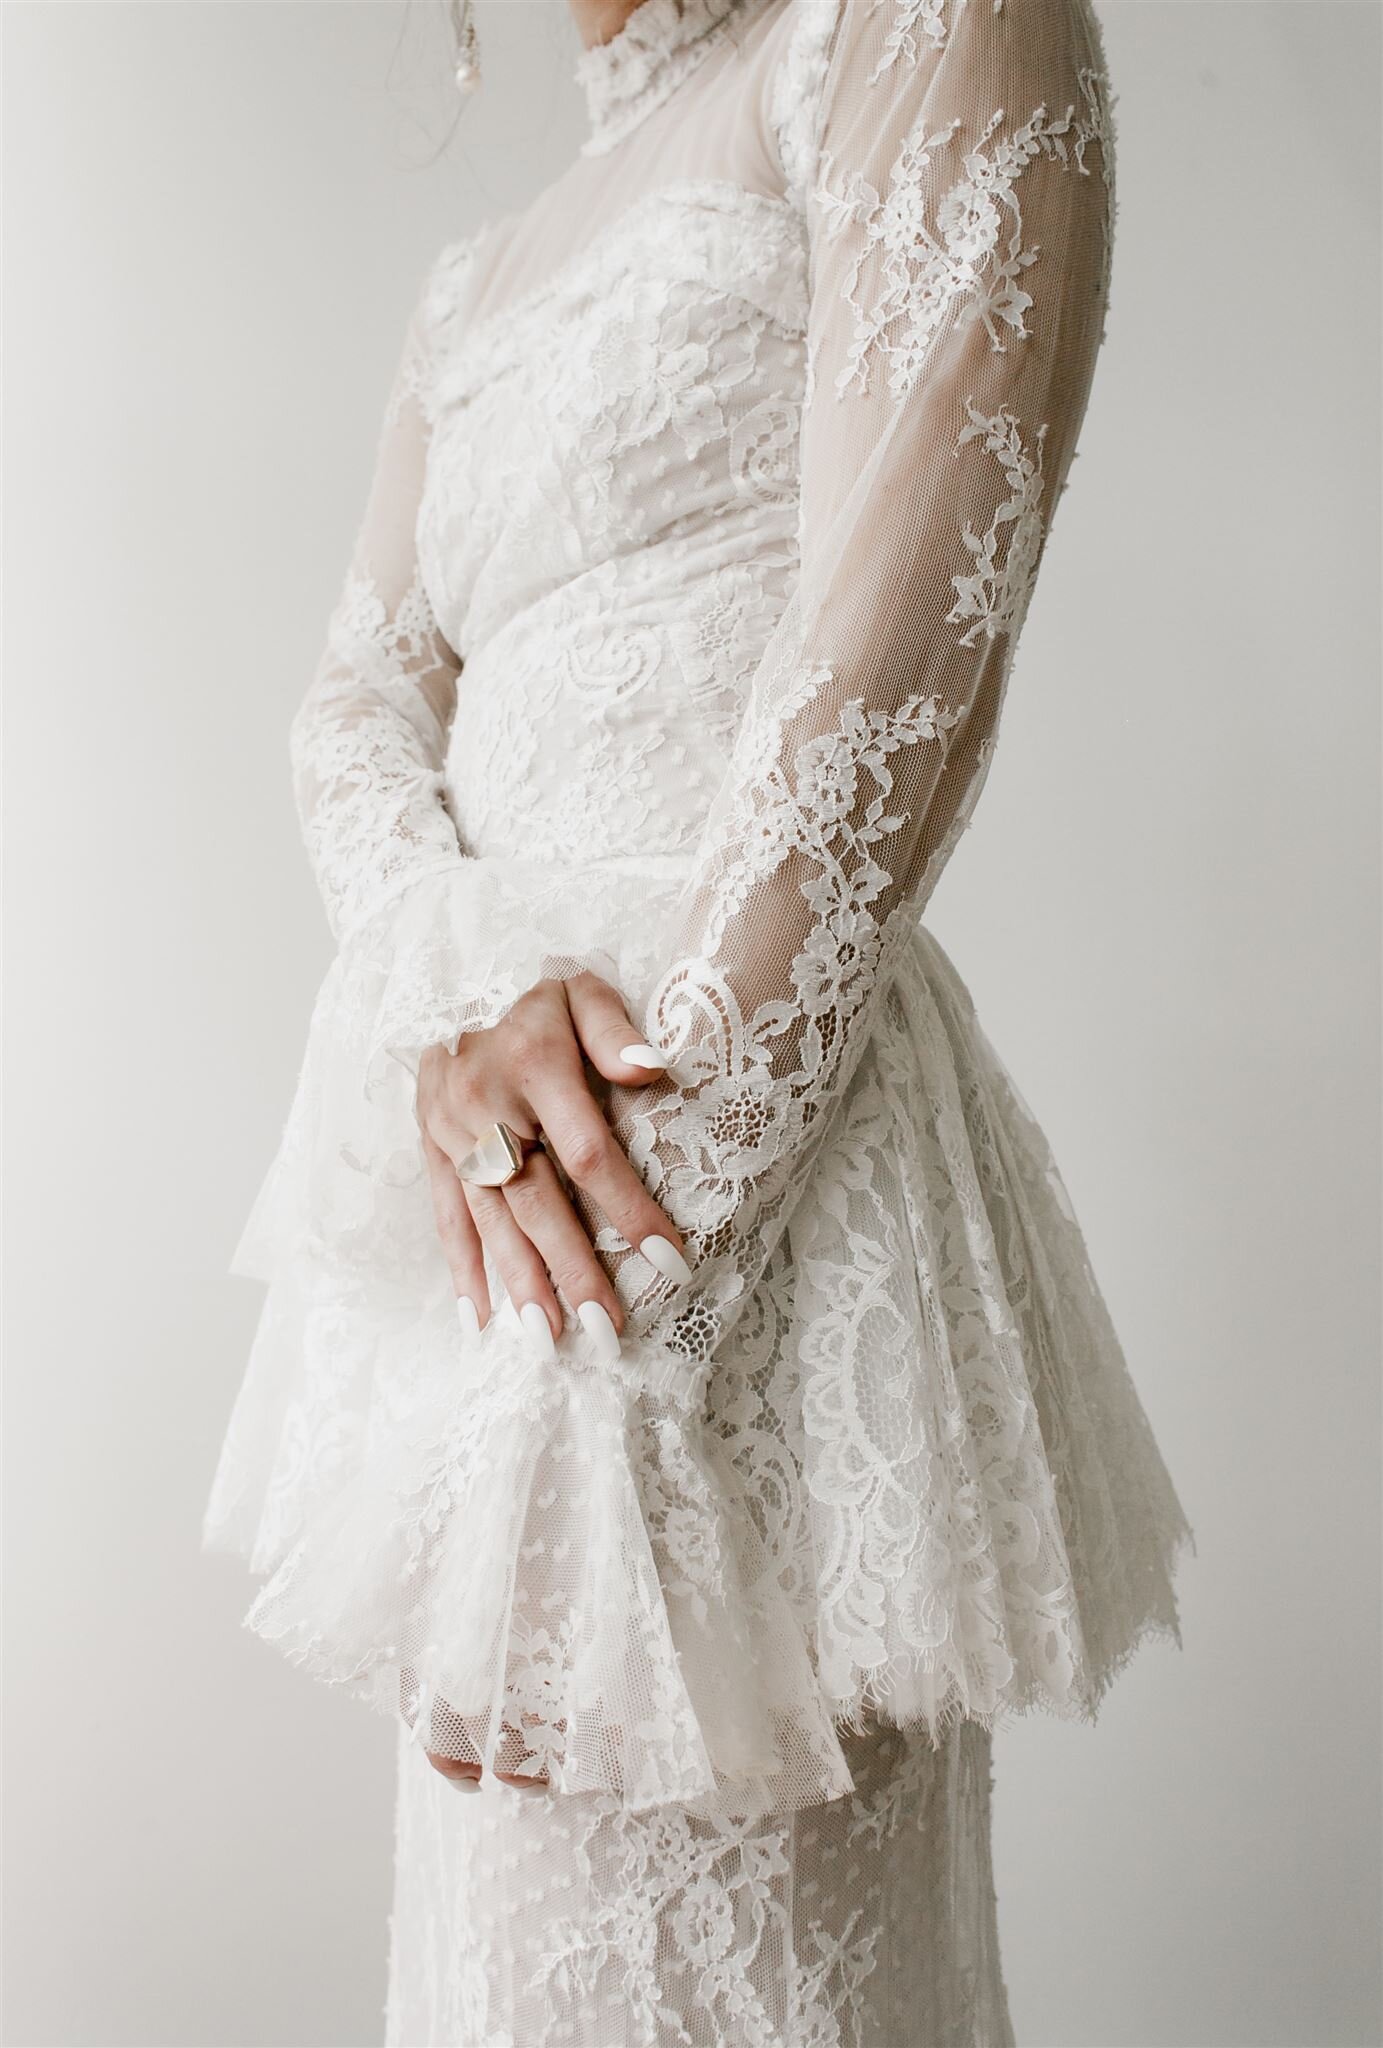 Varca-Bridal-Studio-First-Dress-Earrings-Melody-Joy-Co-69_websize.jpg